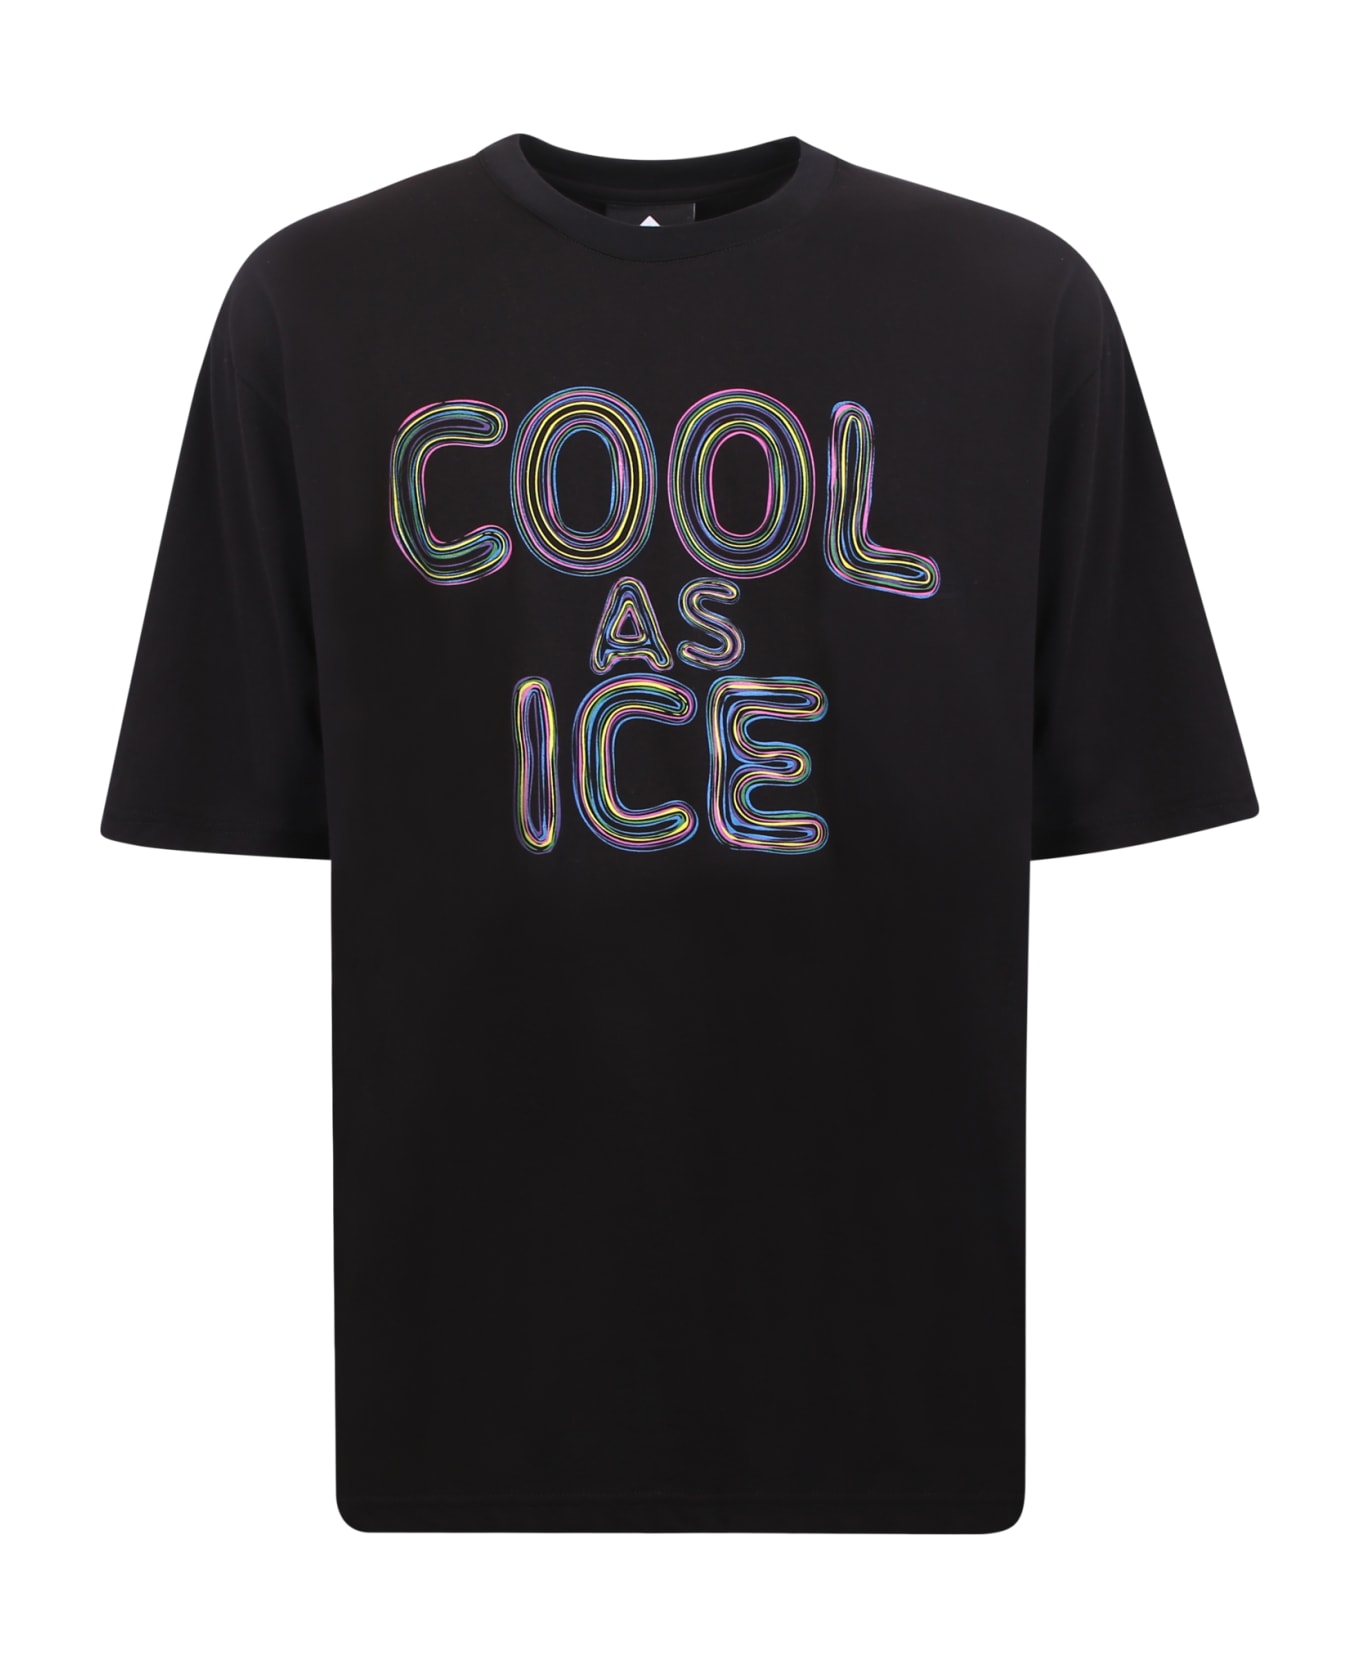 Mauna Kea Cool As Ice T-shirt - Black